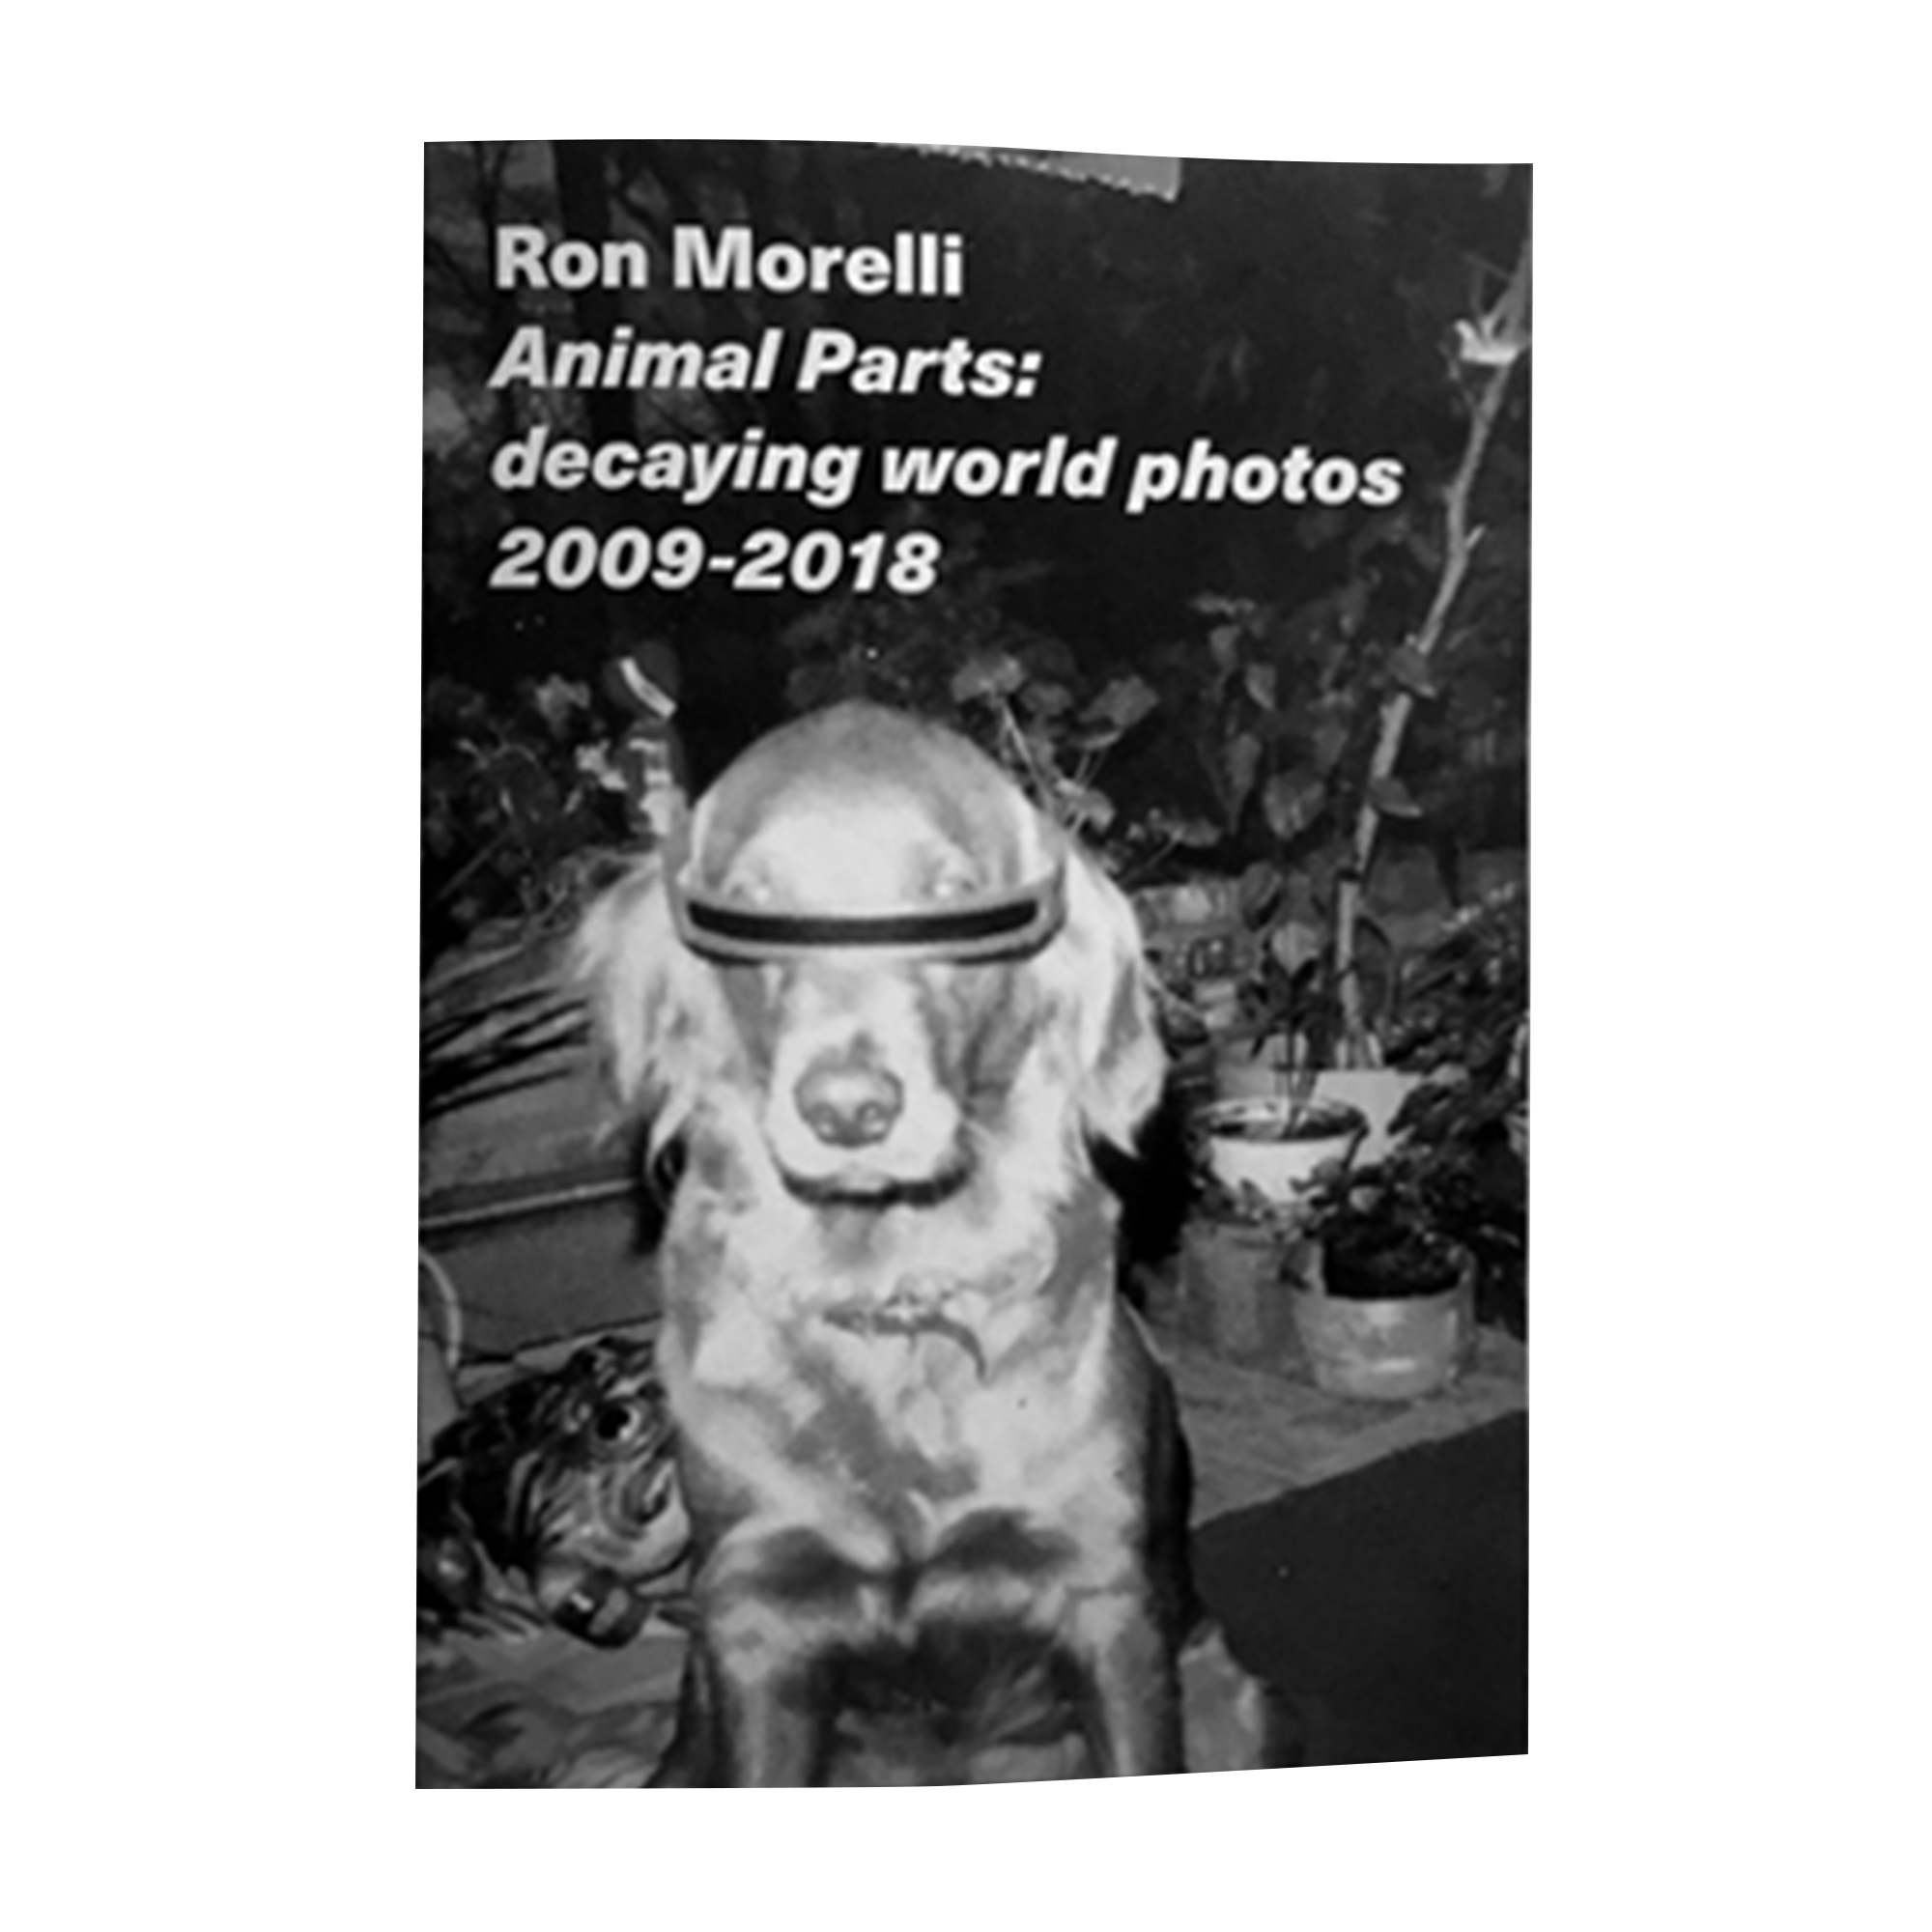 Ron Morelli - Animal Parts: decaying world photos 2009-2018